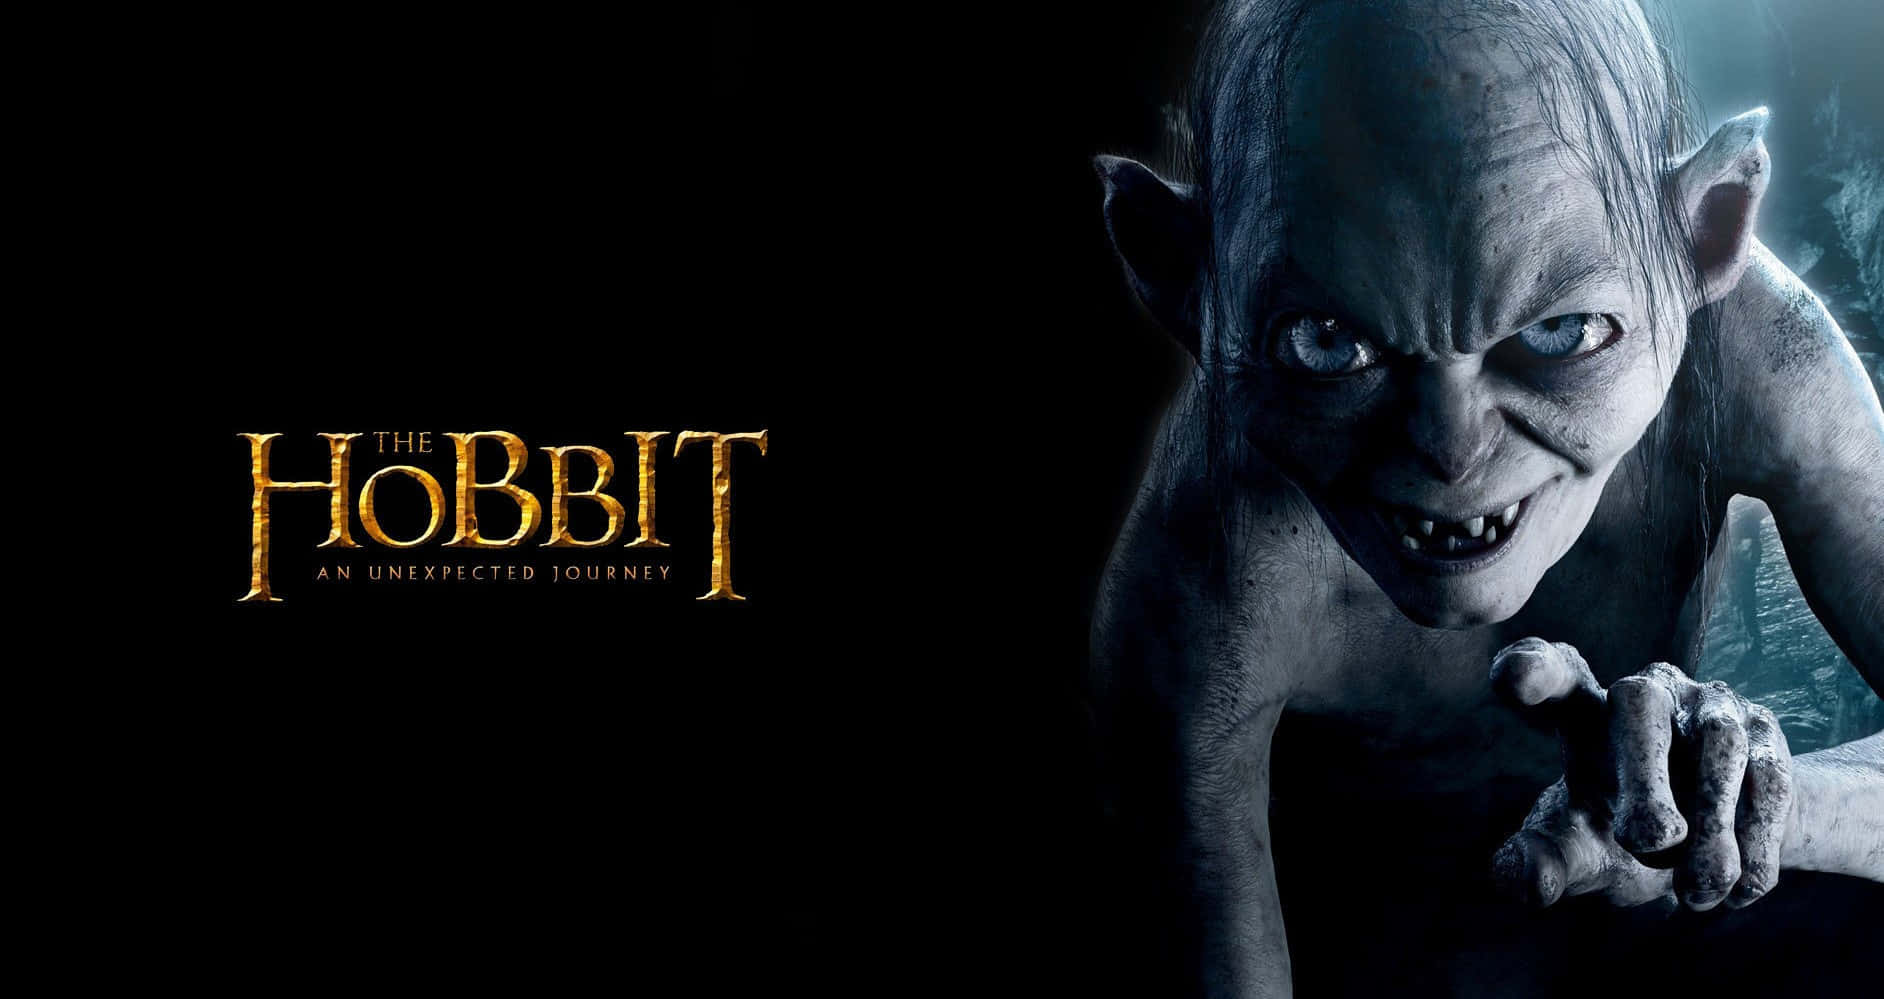 The Hobbit Gollum Promo Art Background